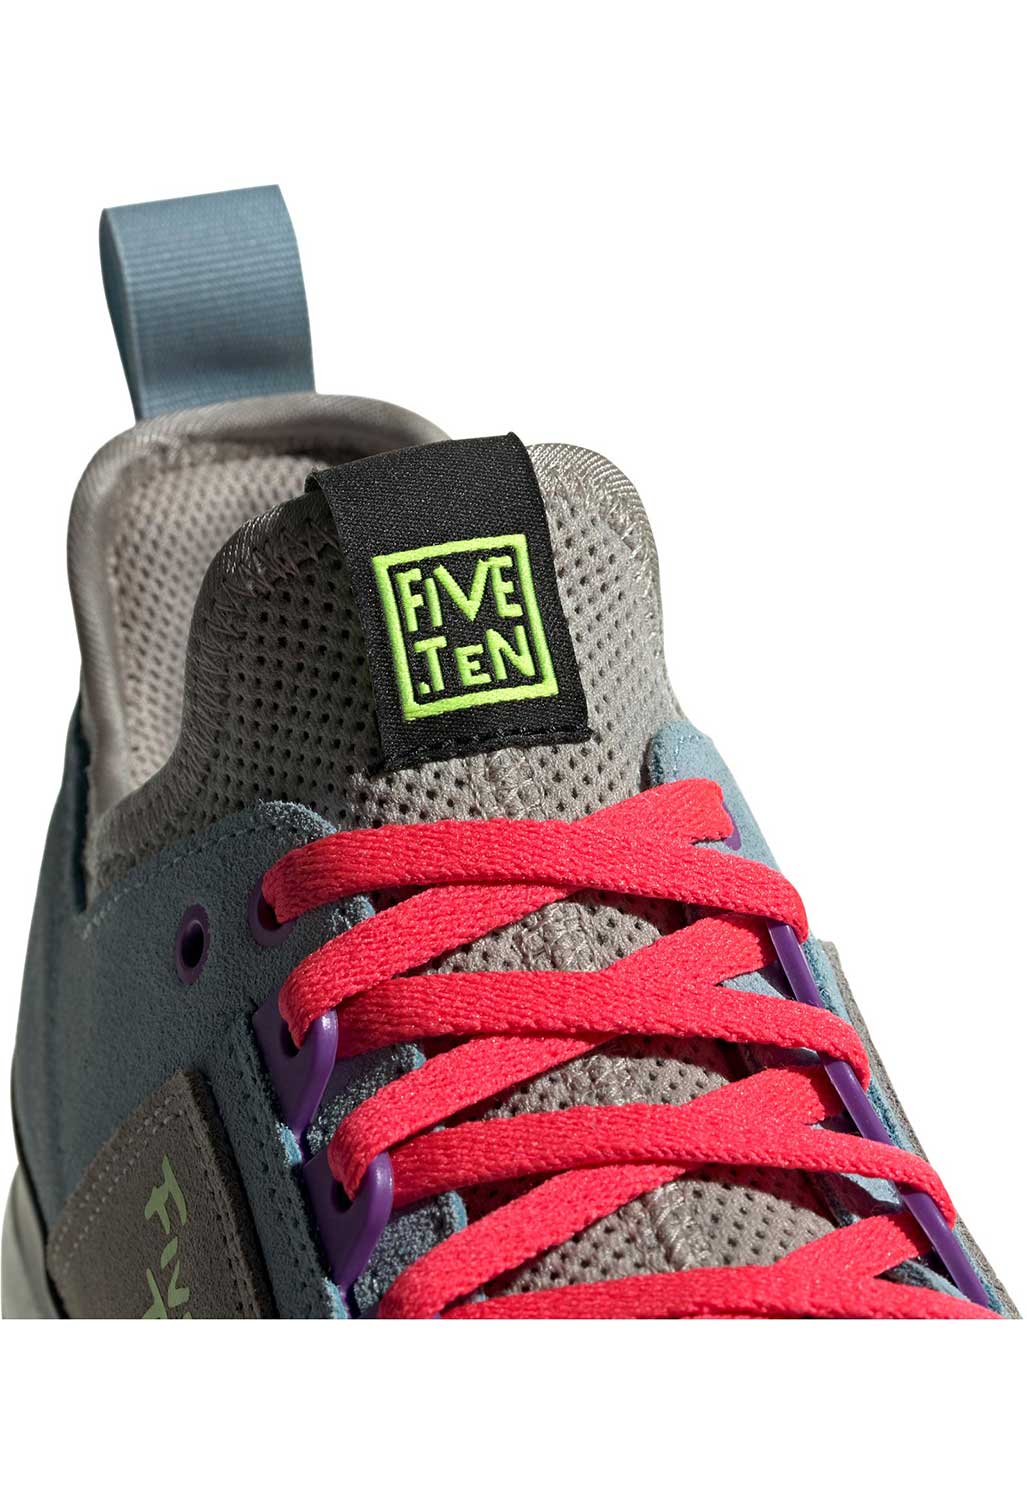 adidas Five Ten Five Tennie Women's Shoes - Light Brown/Ash Grey/Active Purple